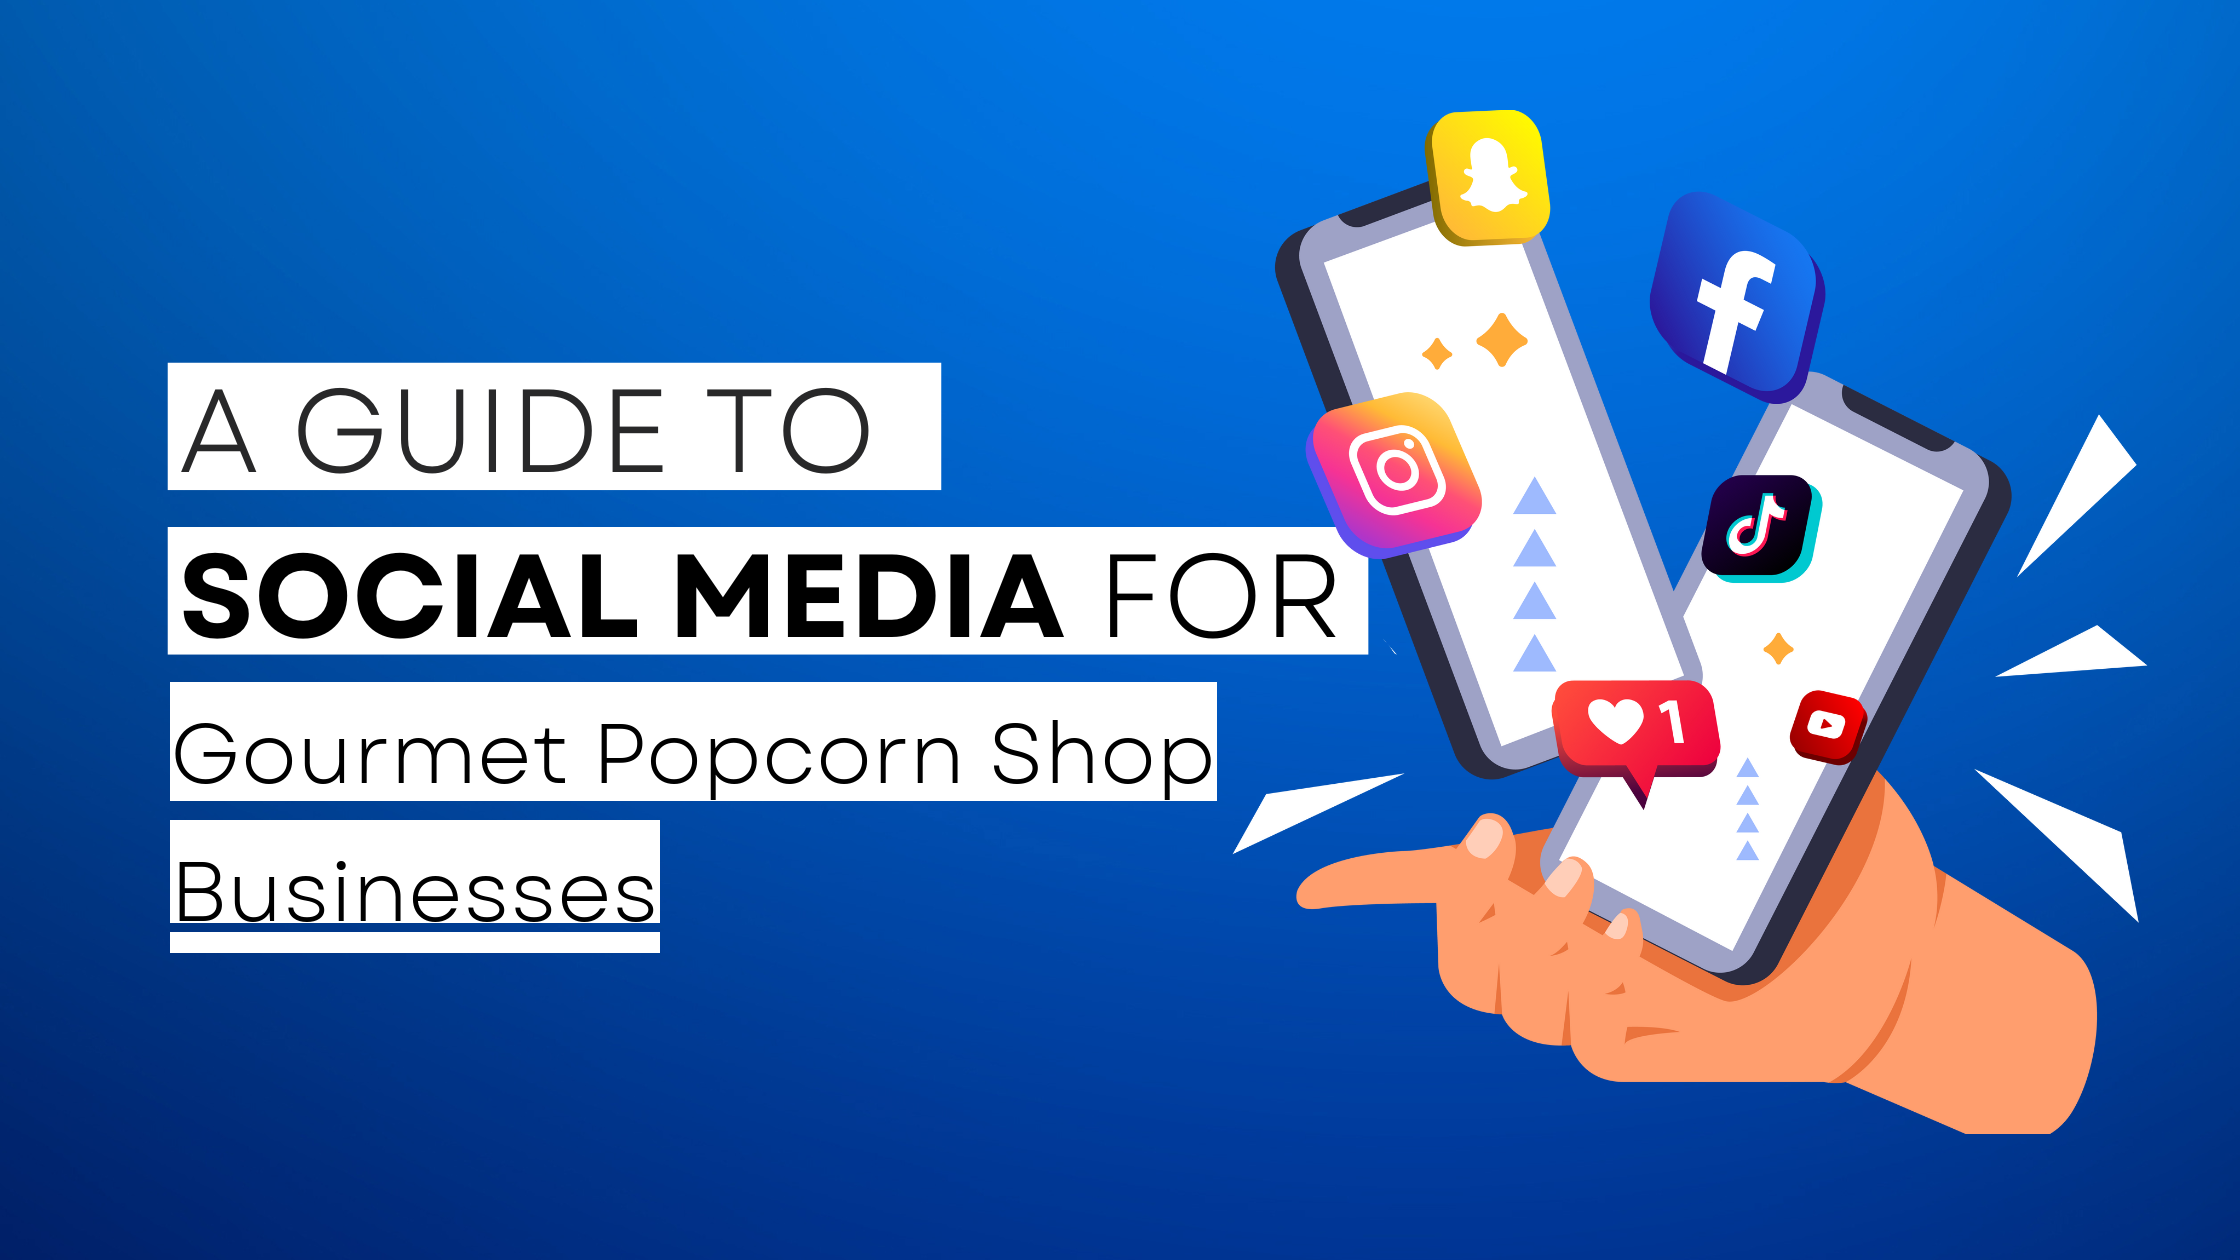 How to start Gourmet Popcorn Shop  on social media